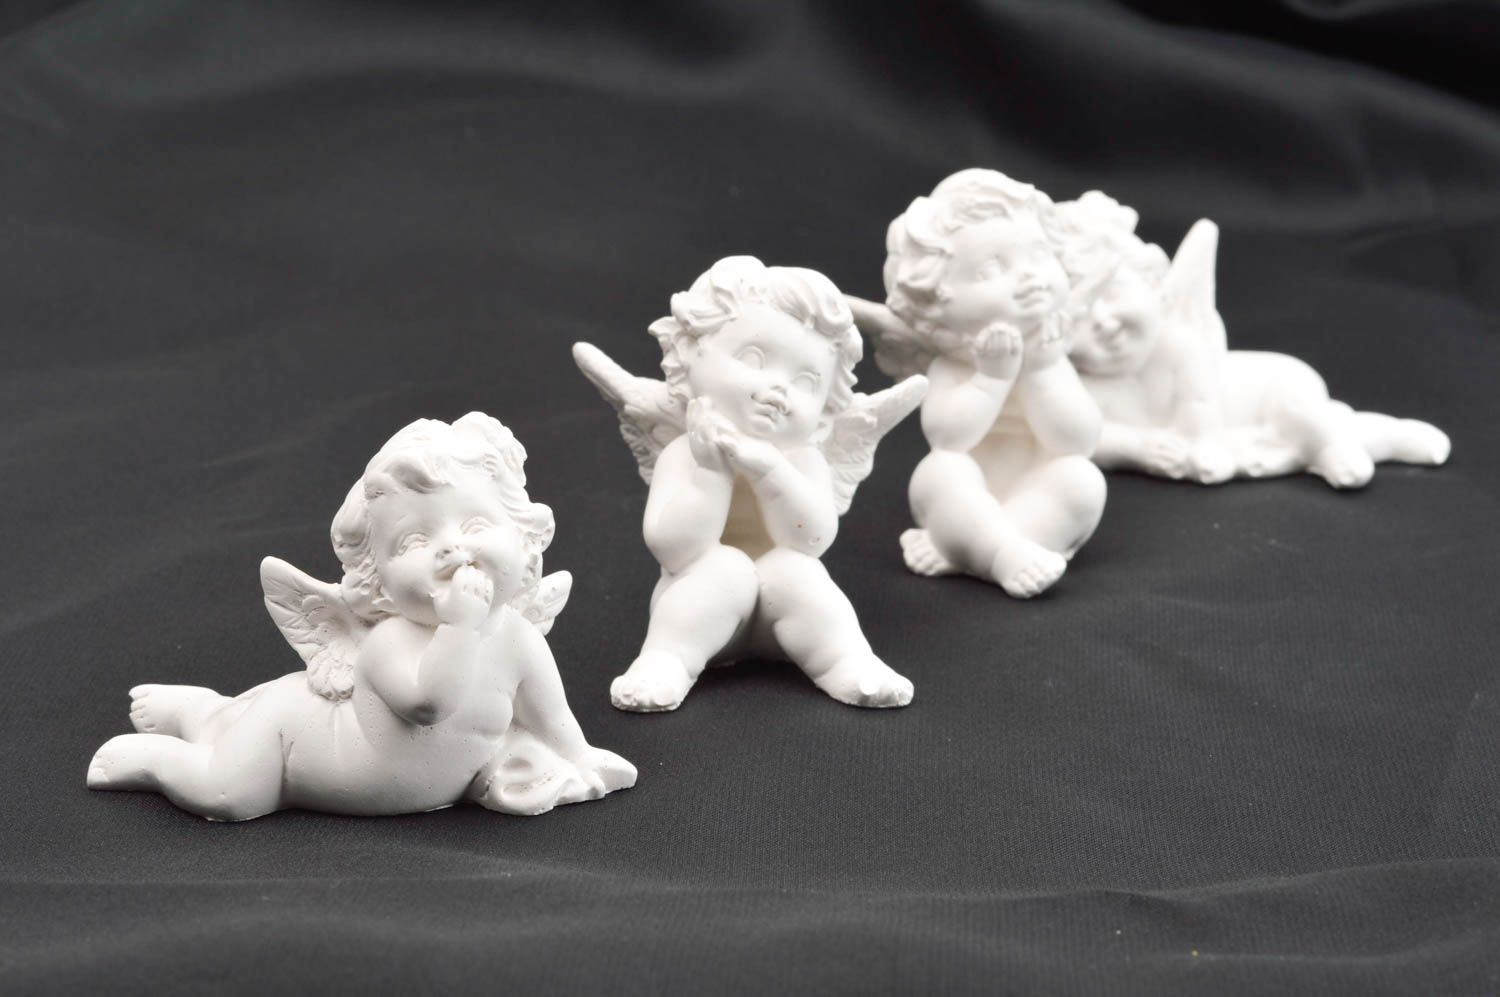 Handmade cute designer figurines 4 stylish statuettes blanks for decoupage photo 2